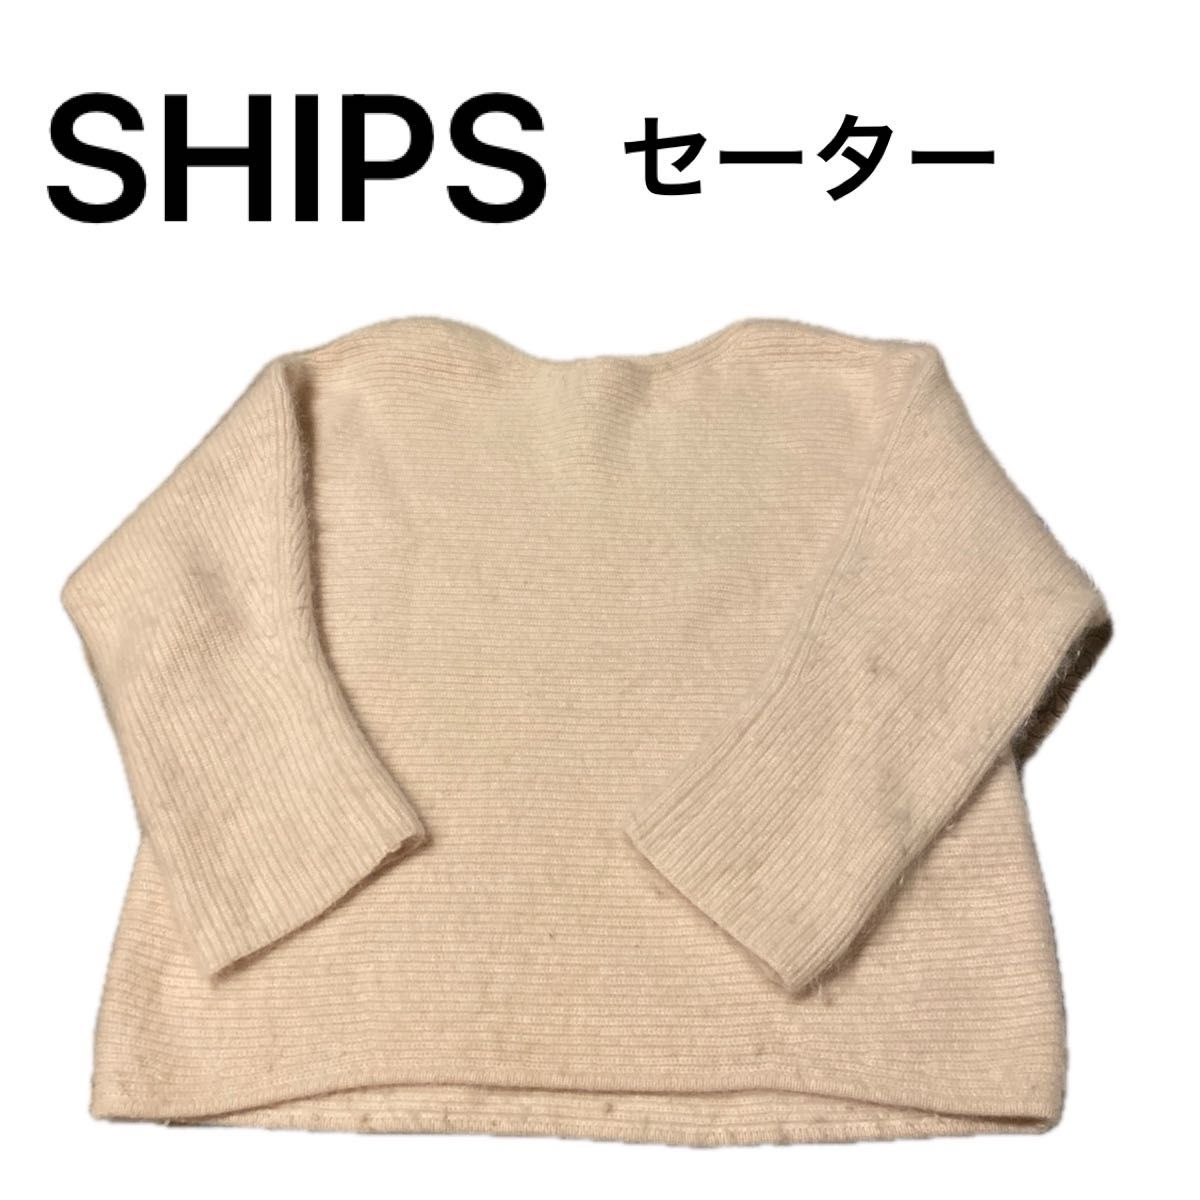 shipsセーターアンゴラ羊毛ナイロン